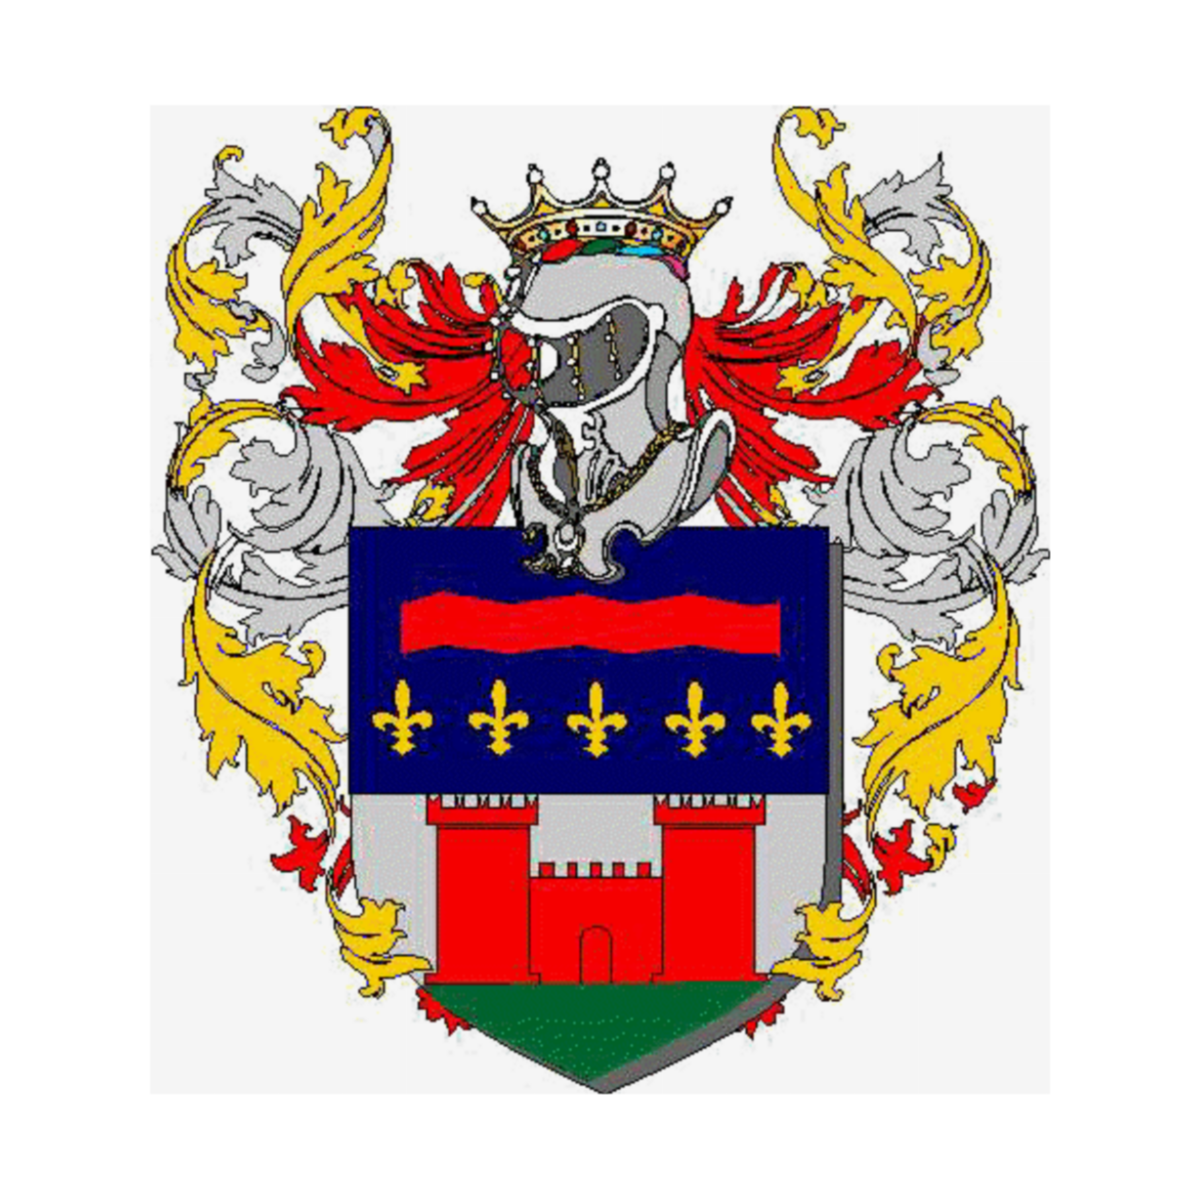 Wappen der Familie Carabetti Beccari